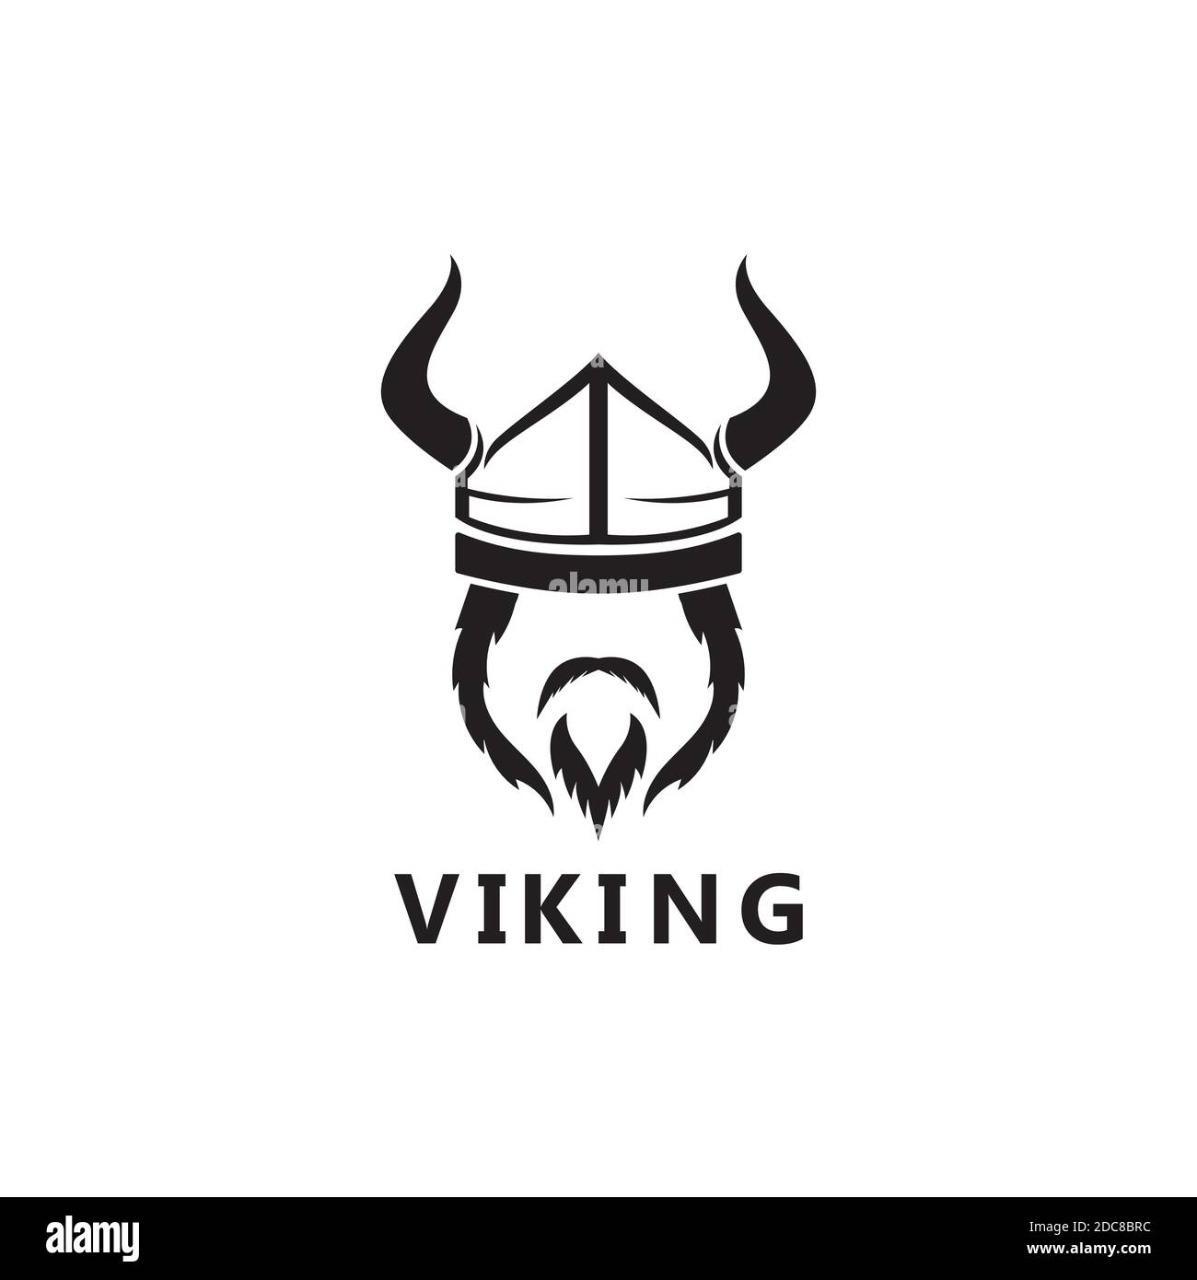 Vikingo95?s=dn8uo1eroulolzbs8zxa8hudho7k6j7sas8nocw3krk=